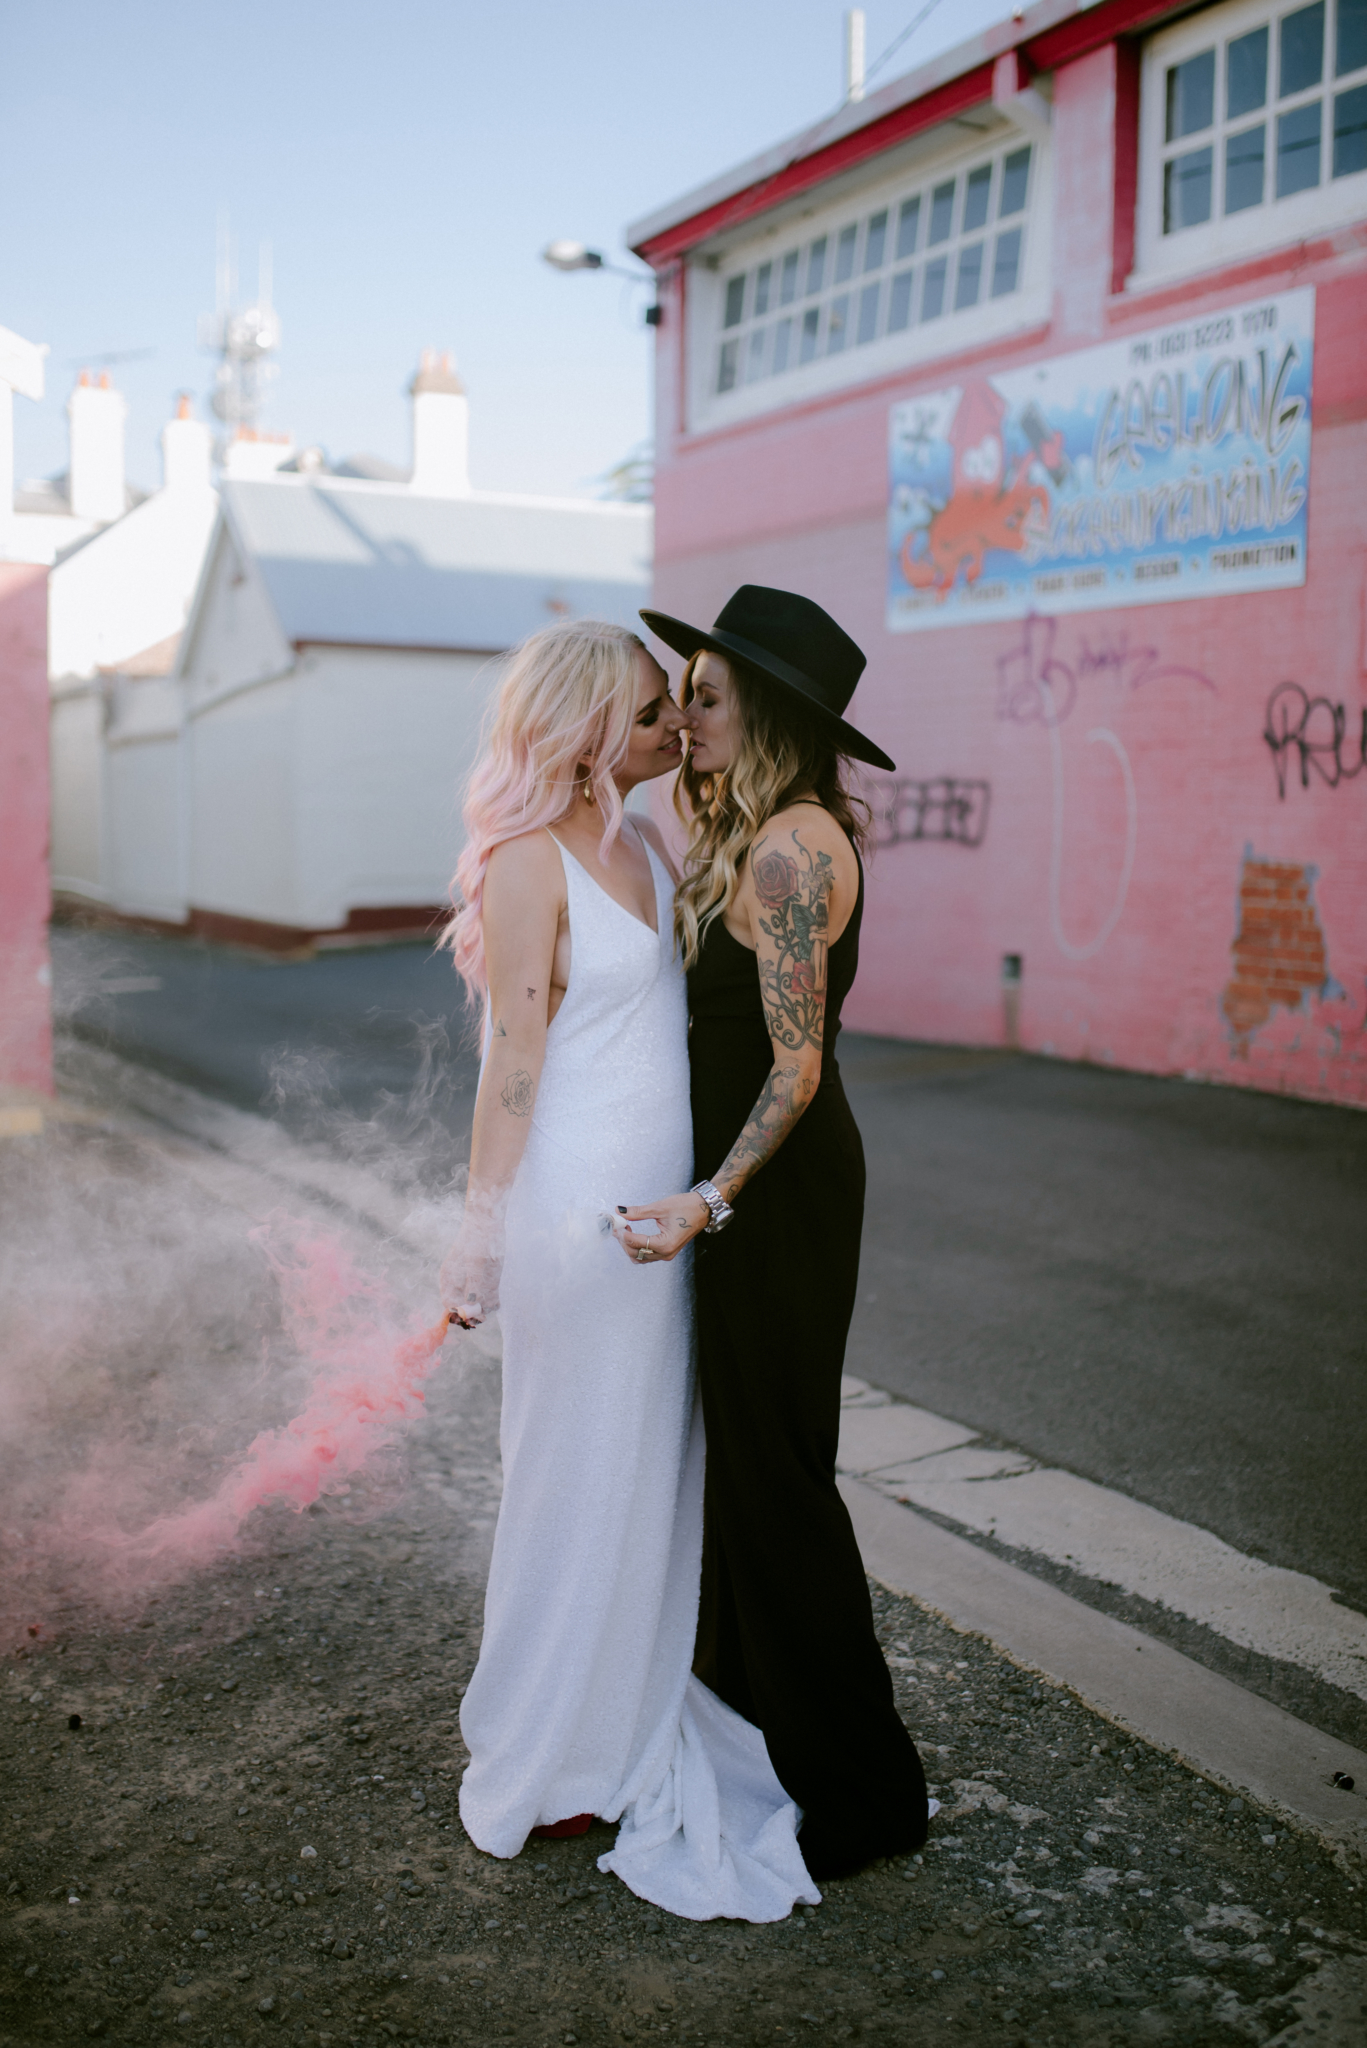 JESSI & MILLIE’S MELBOURNE WEDDING – Hello May